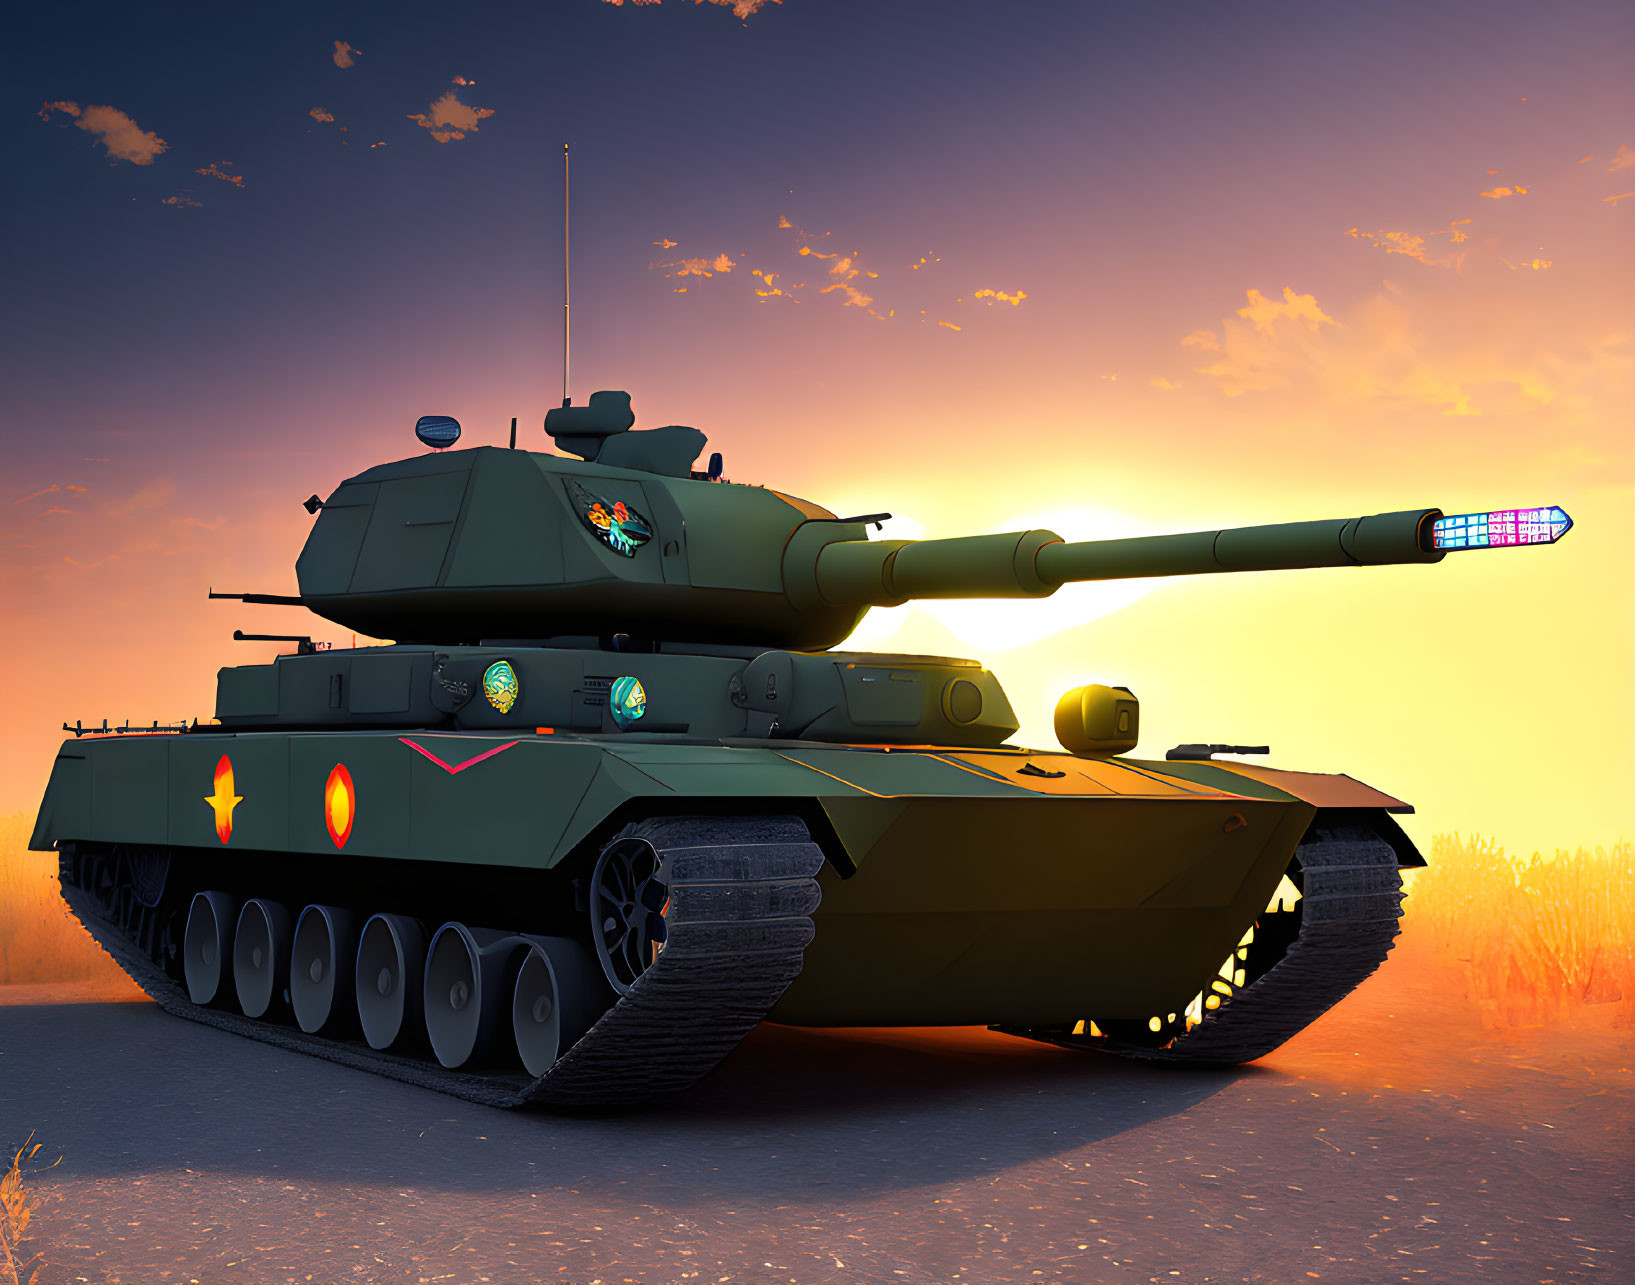 Modern Battle Tank in Camouflage Paint Scheme Against Sunset Sky